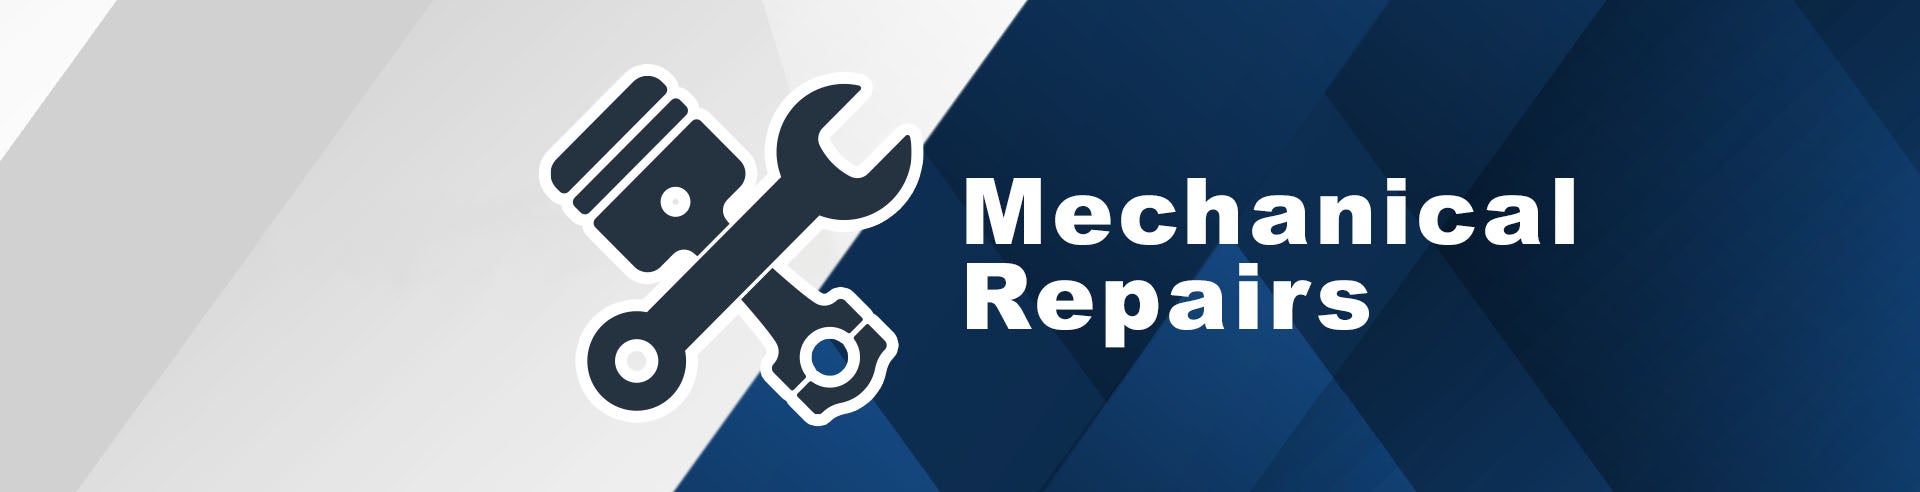 Car Truck SUV Mechanical Repairs Engine Transmission